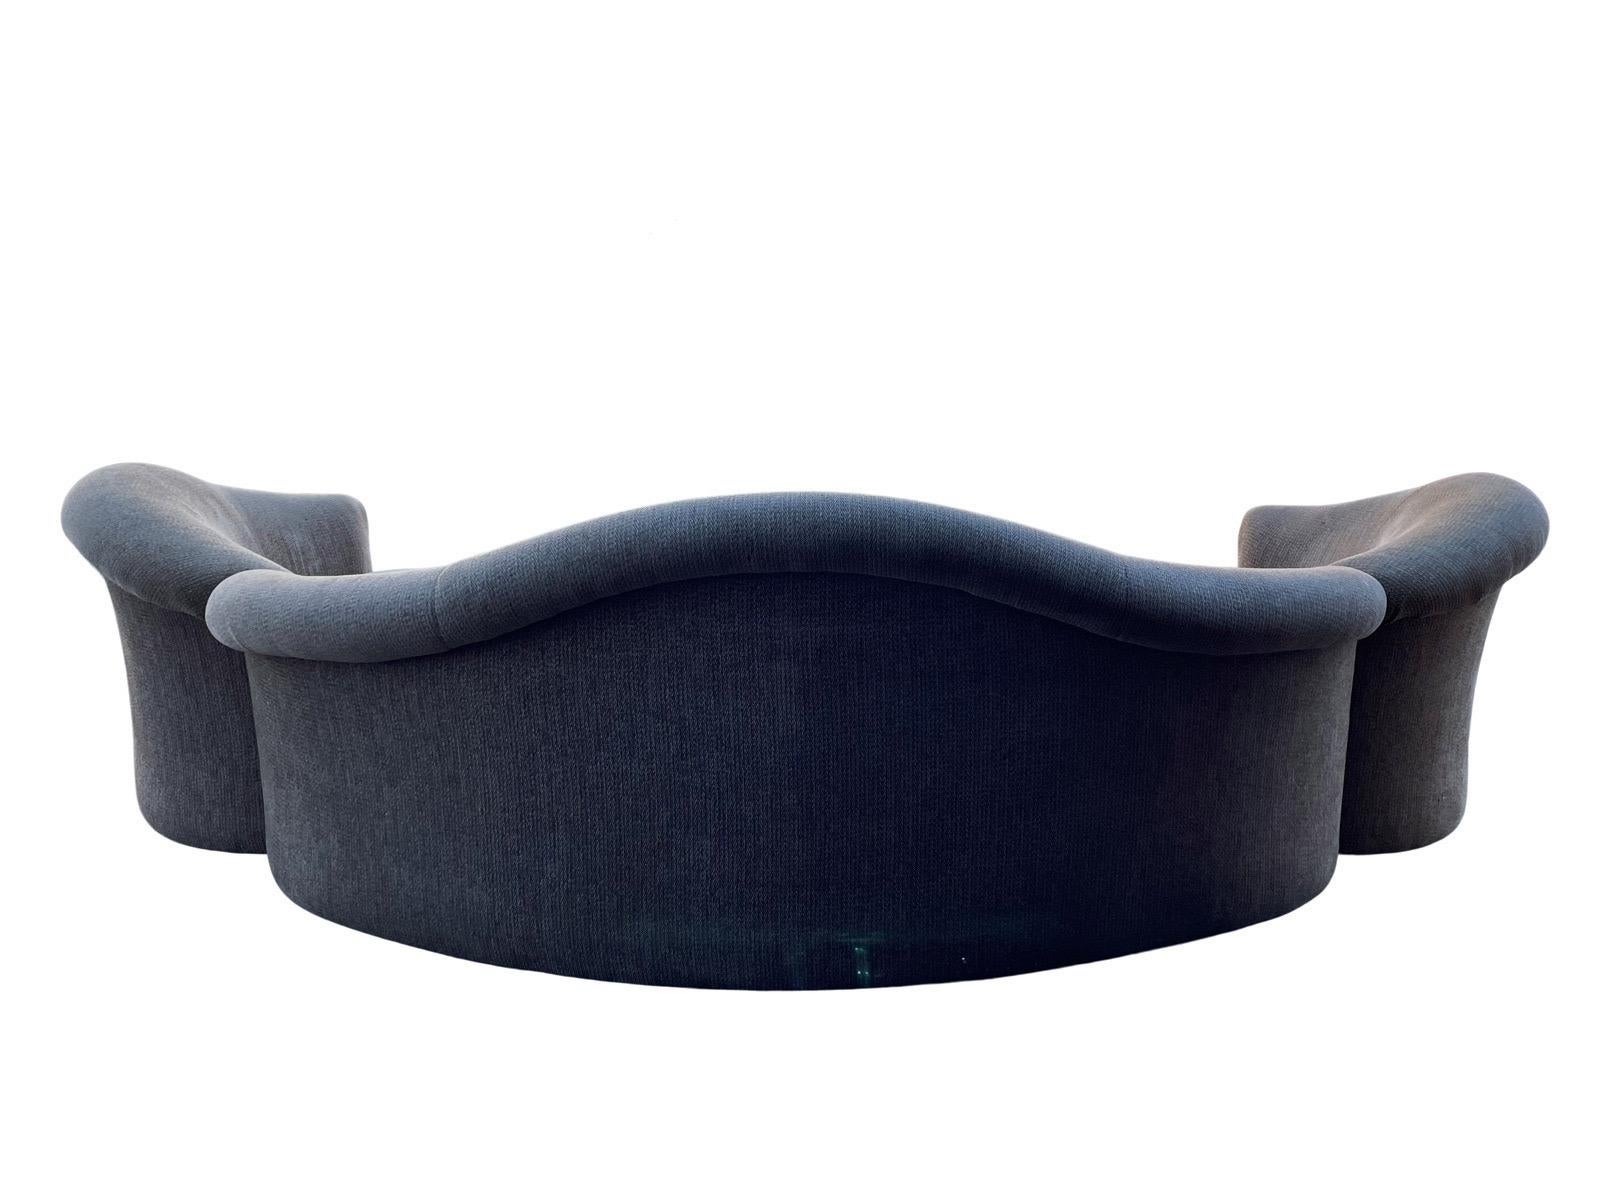 Upholstery 1990s Sculptural Sectional Designer Sofa For Sale